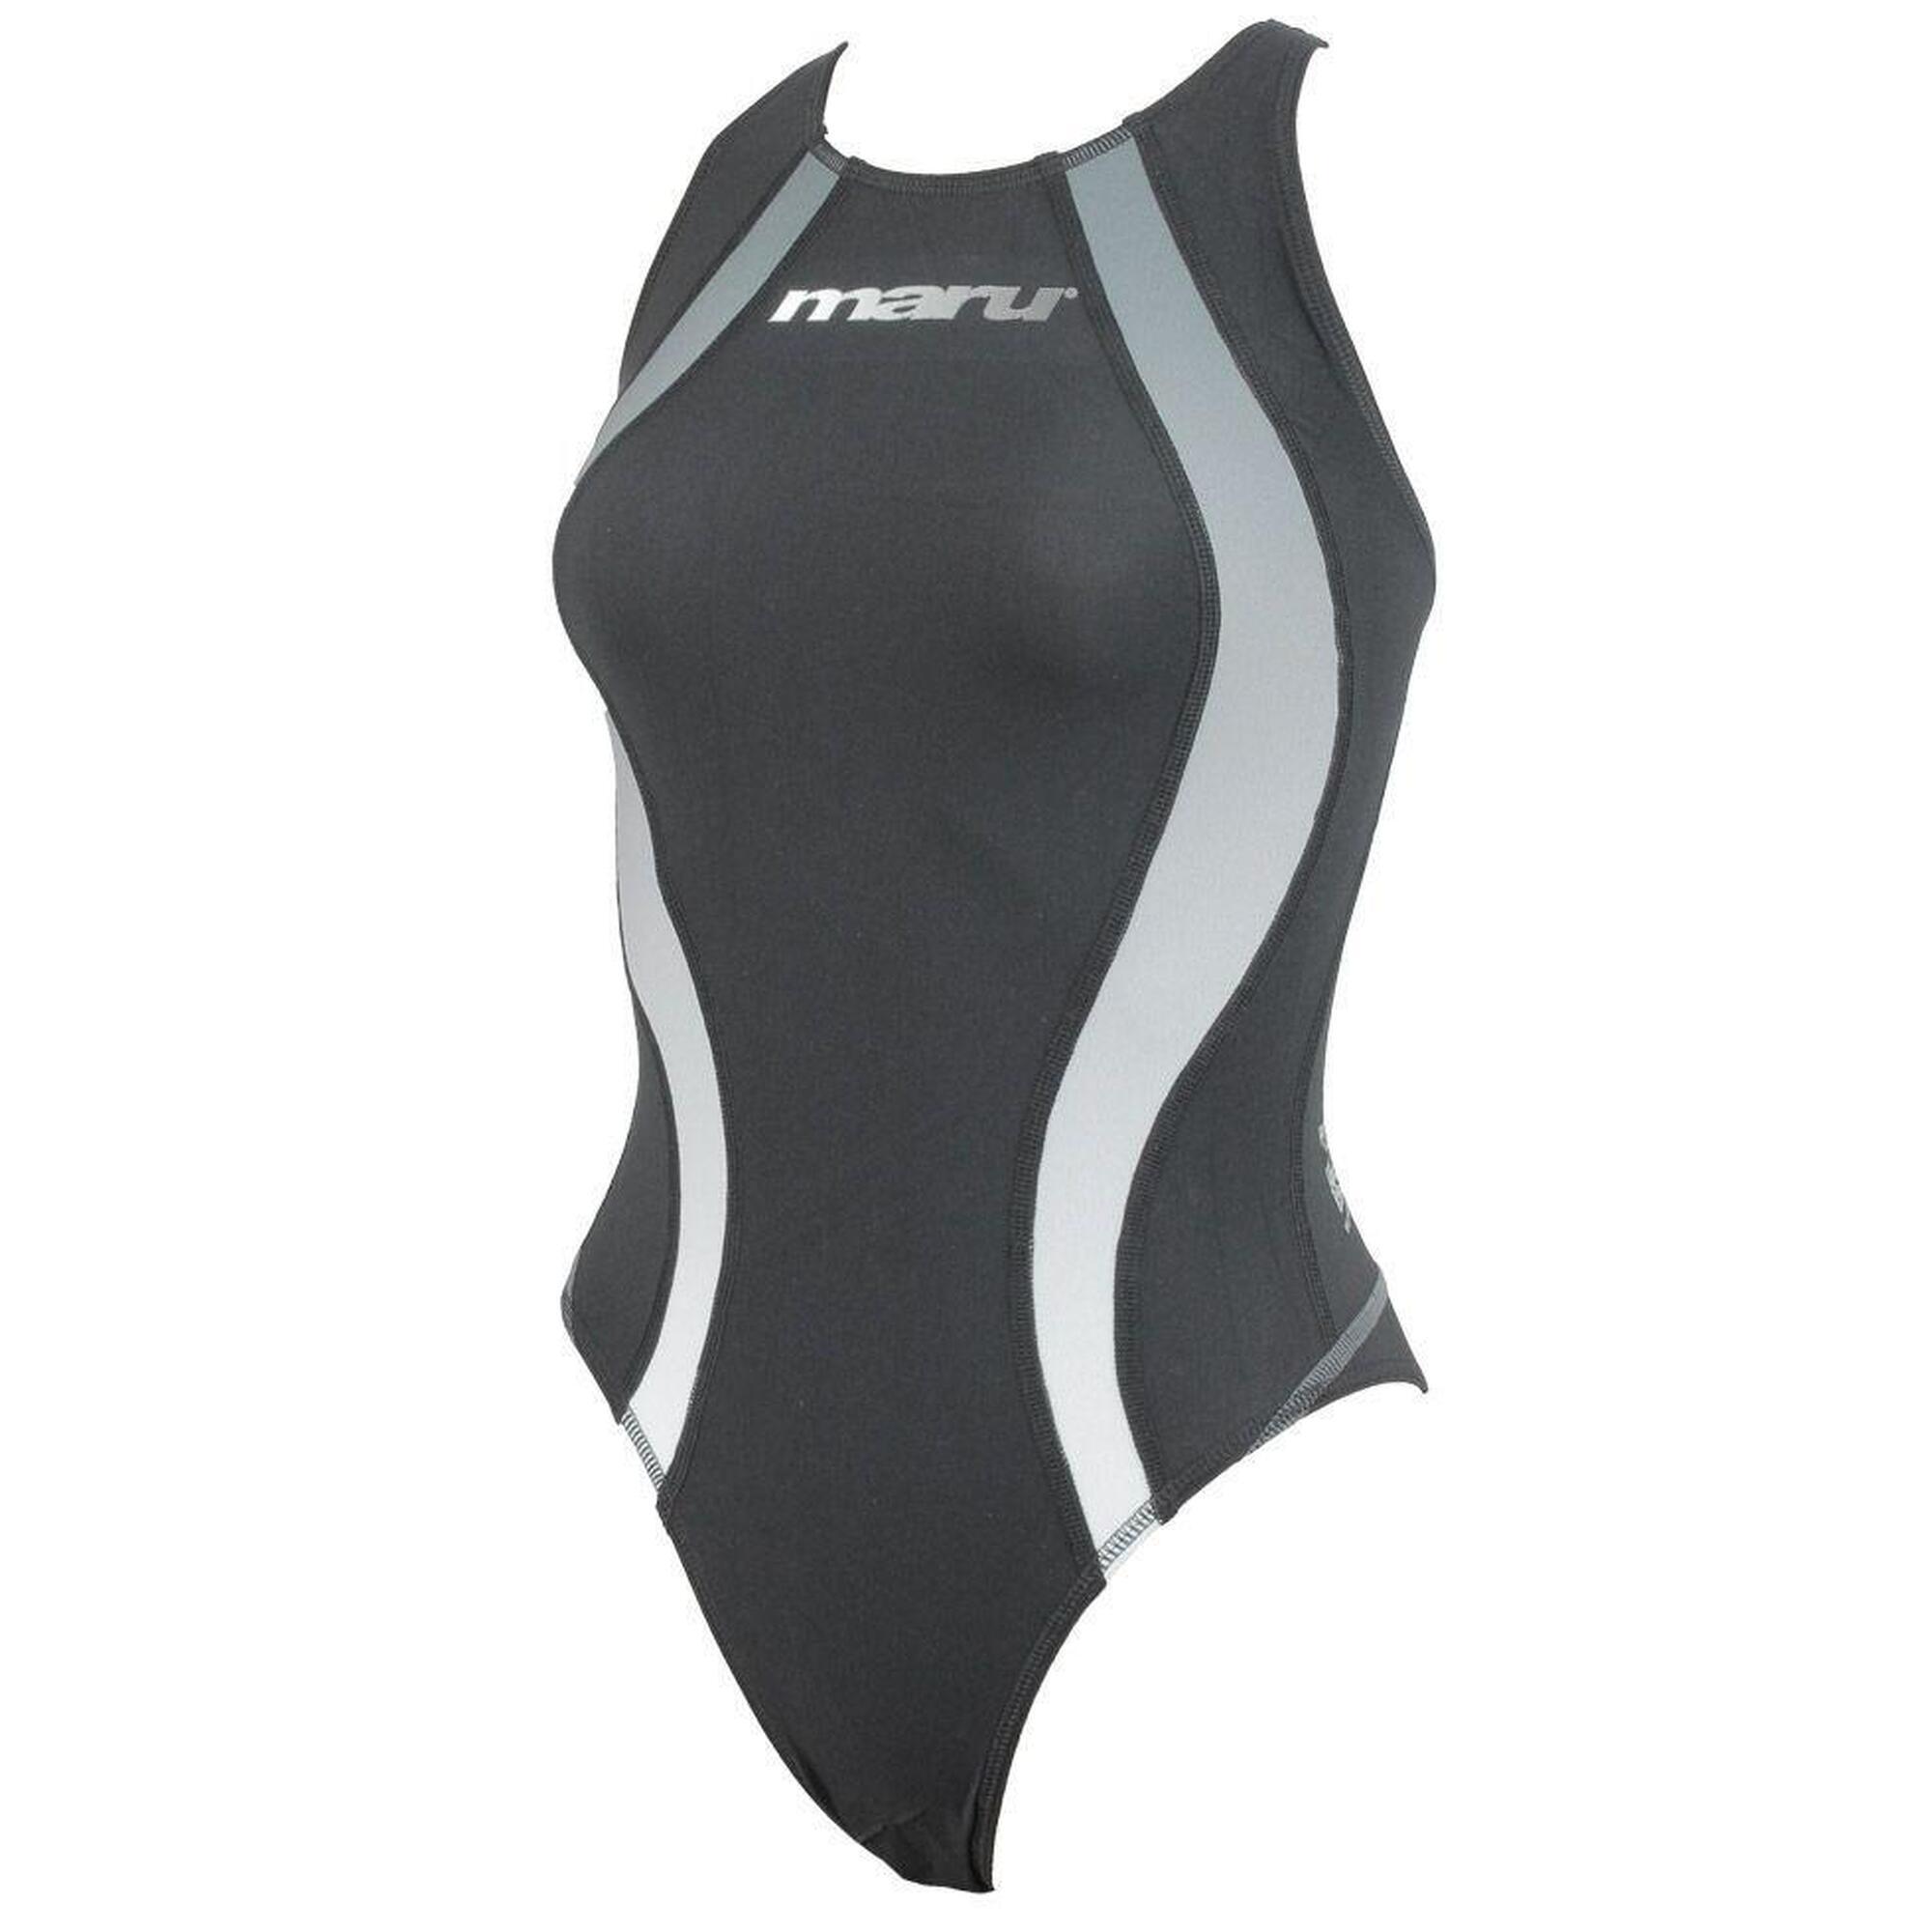 FP7101 (國際泳聯批准）Pulse 泳衣-黑色